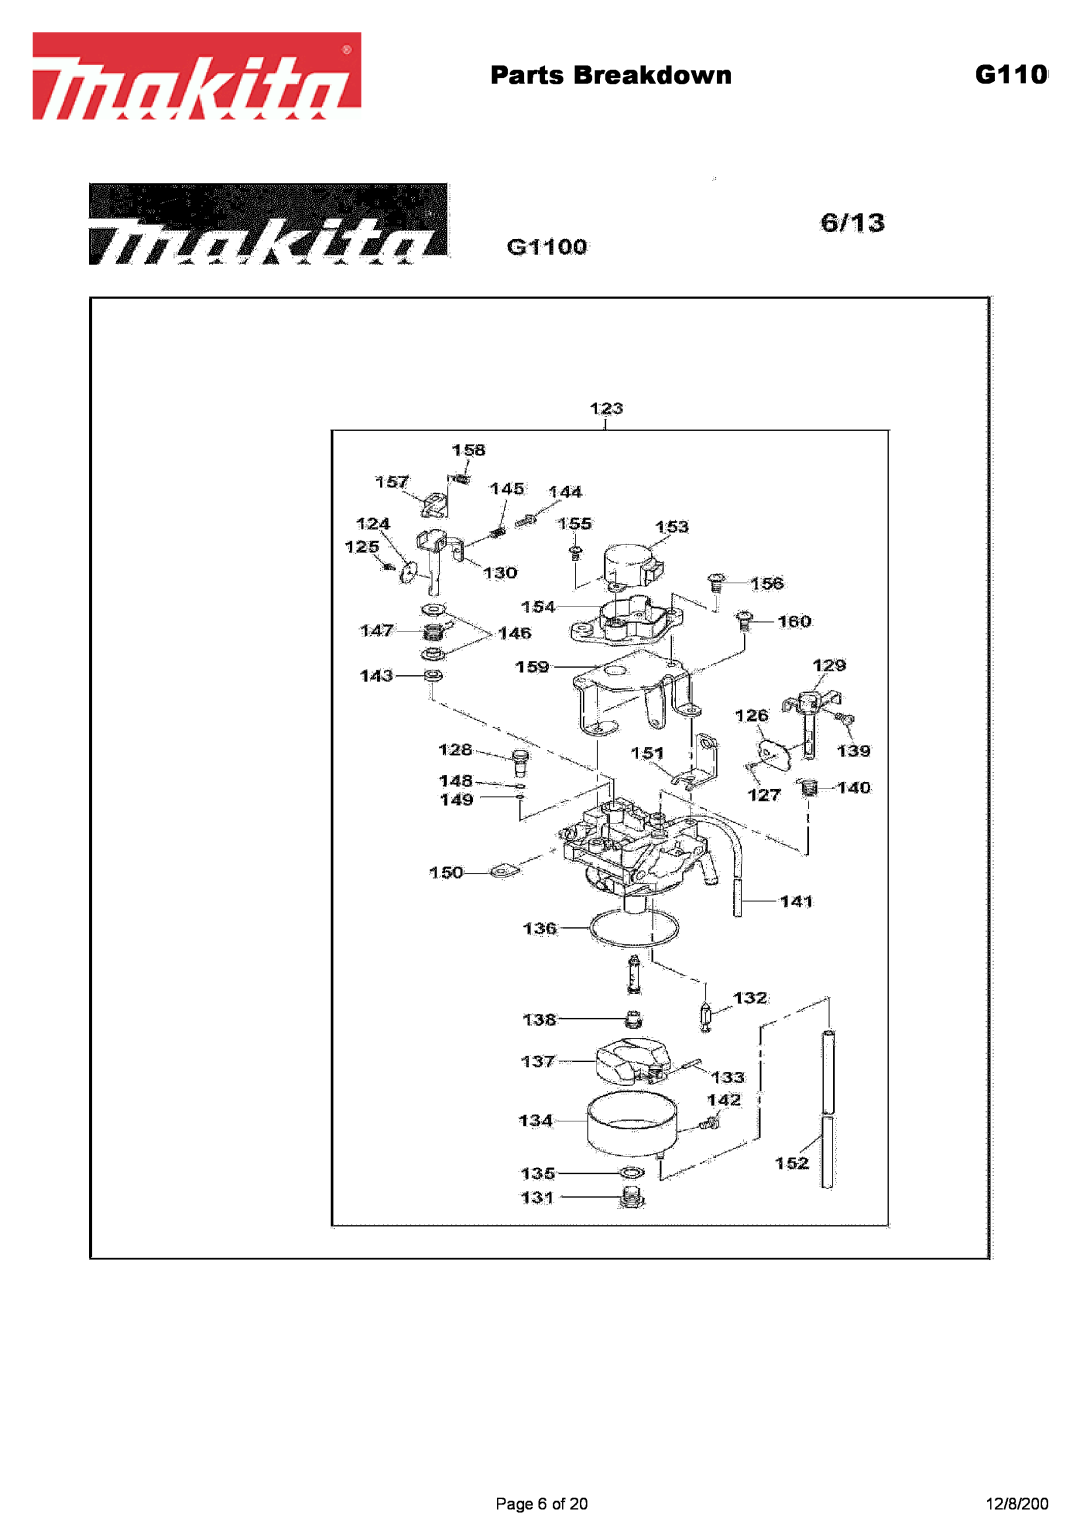 Makita G1700i manual Parts Breakdown, G110, Page 6 of, 12/8/200 